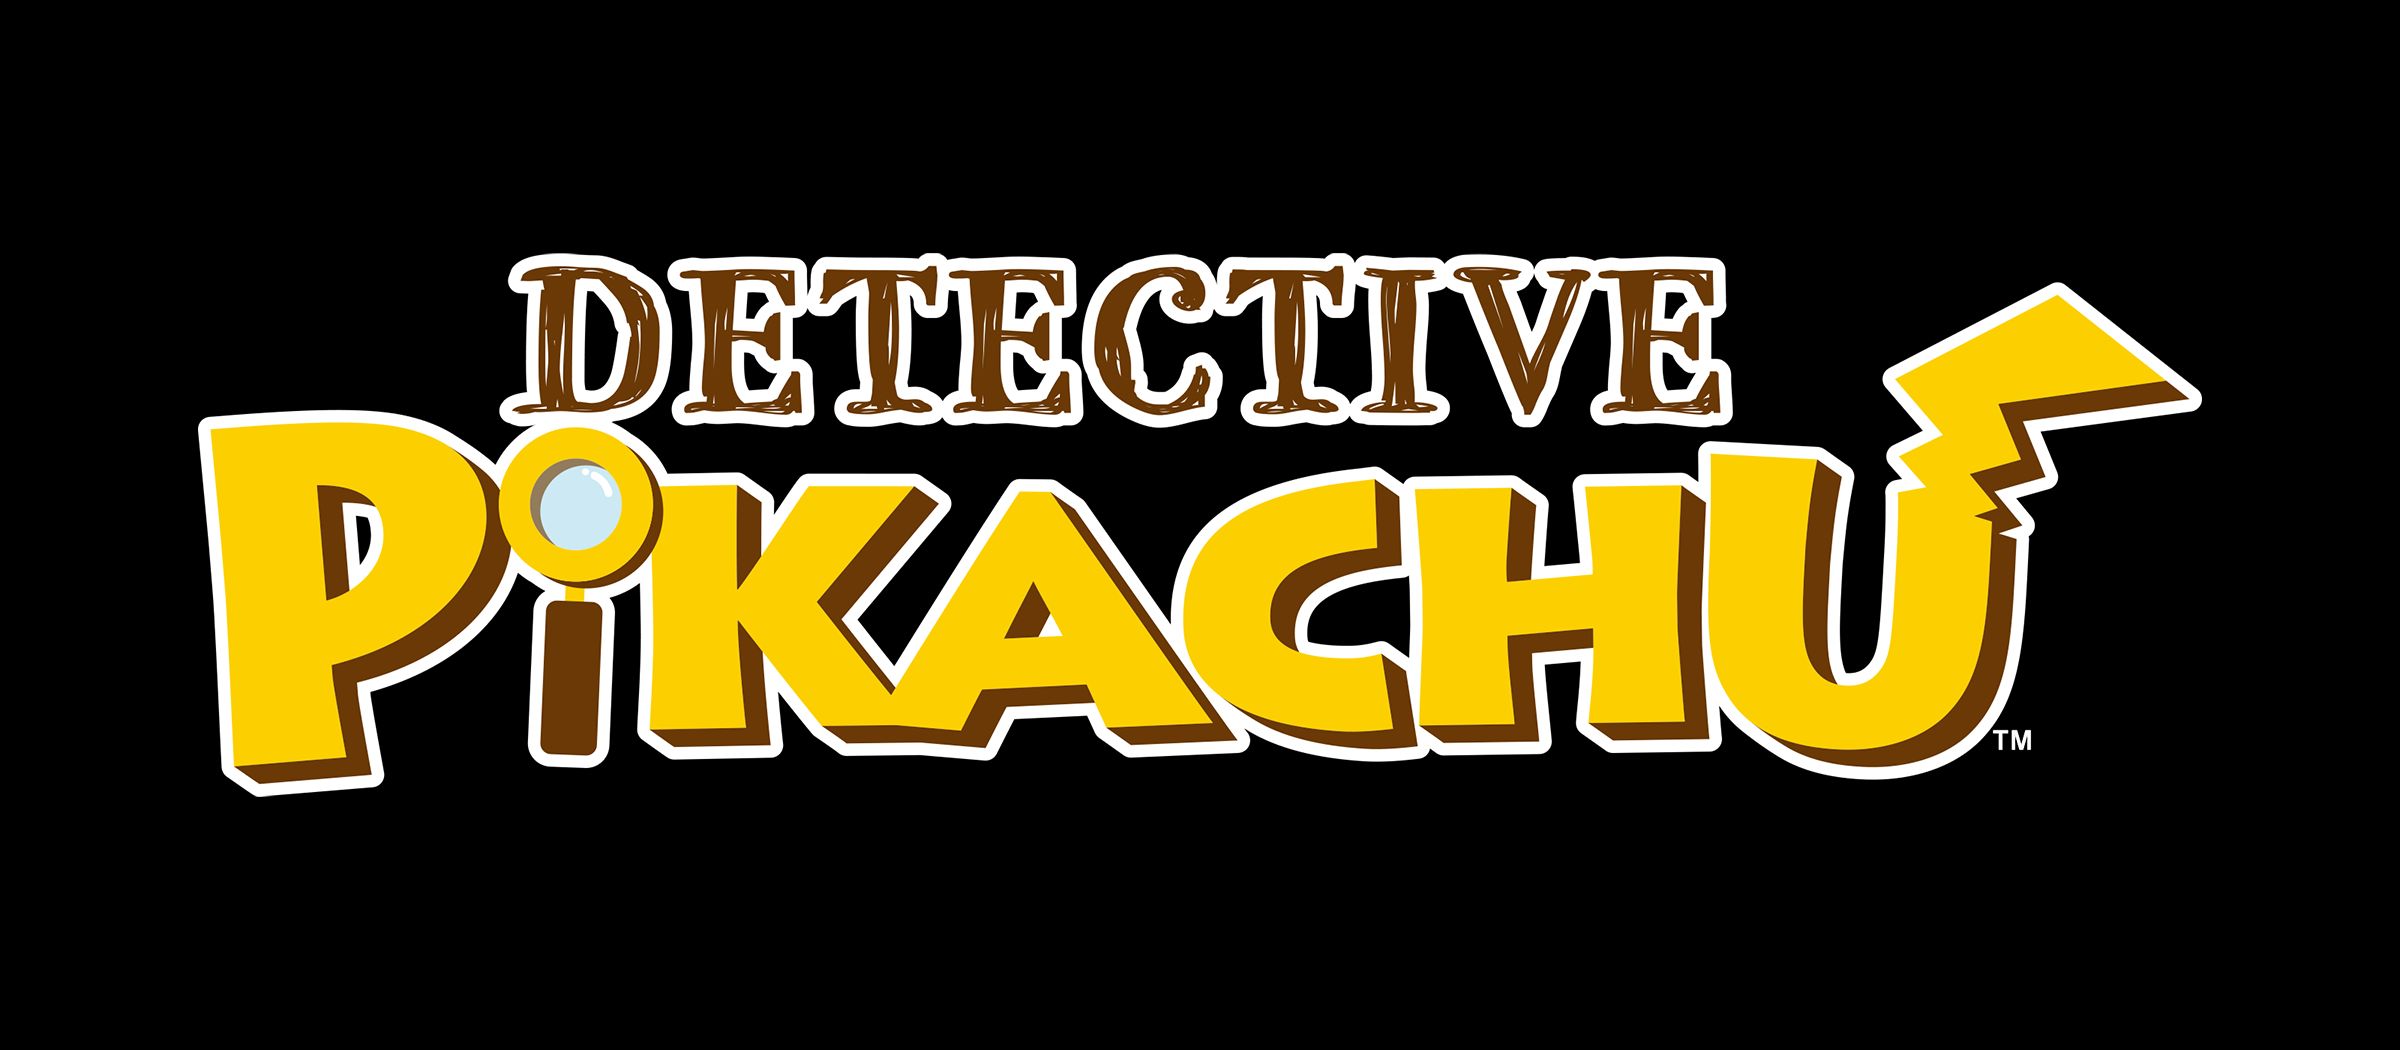 Cool Detective Pikachu HD Wallpaper